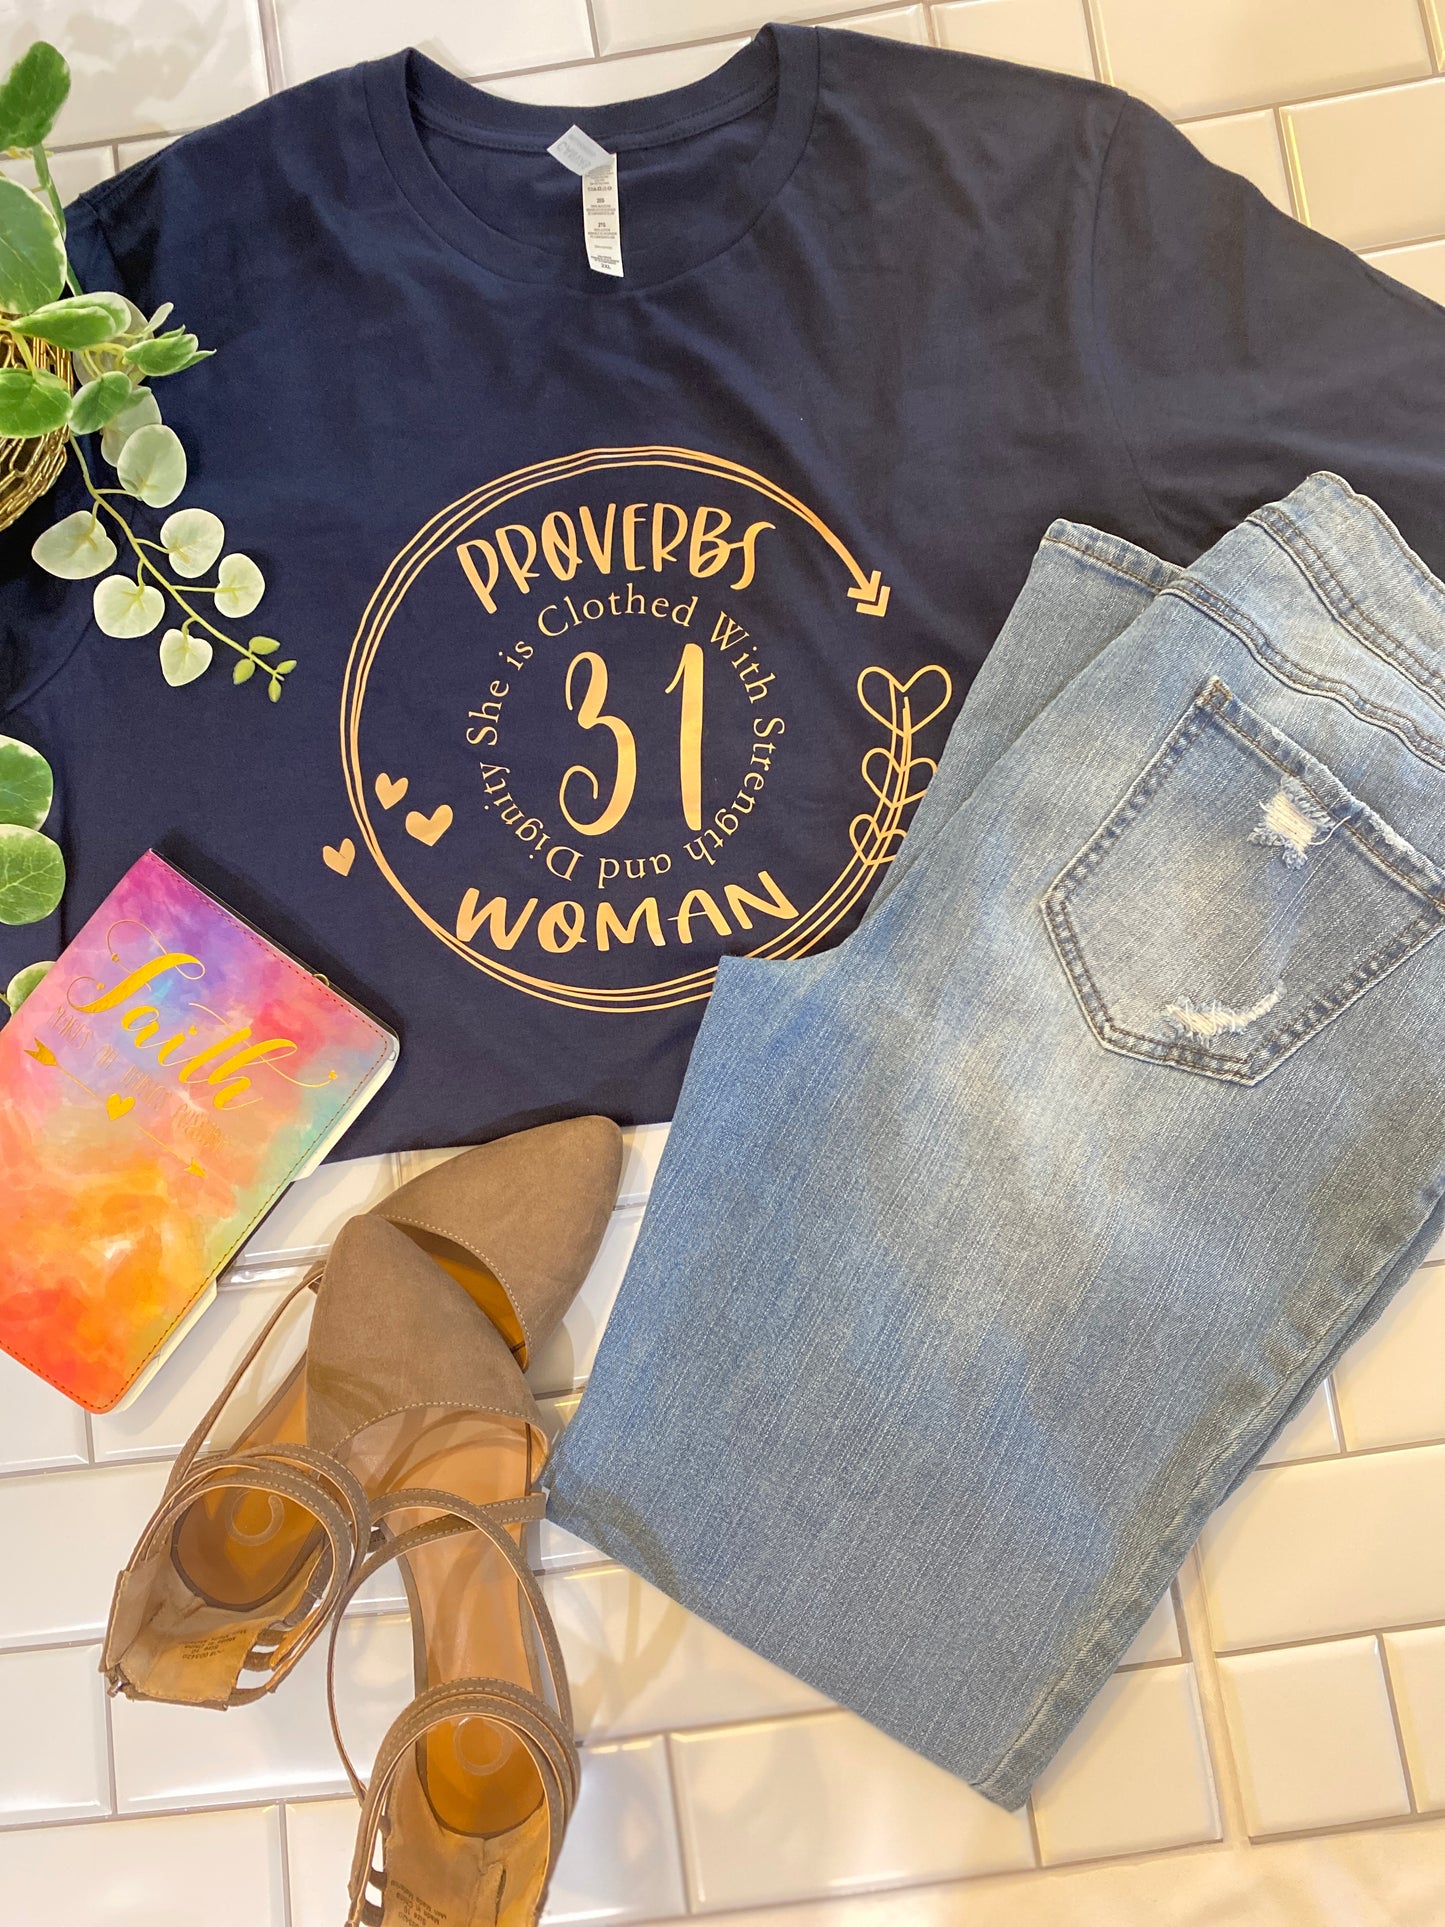 Proverbs 31 Woman (T-shirt)